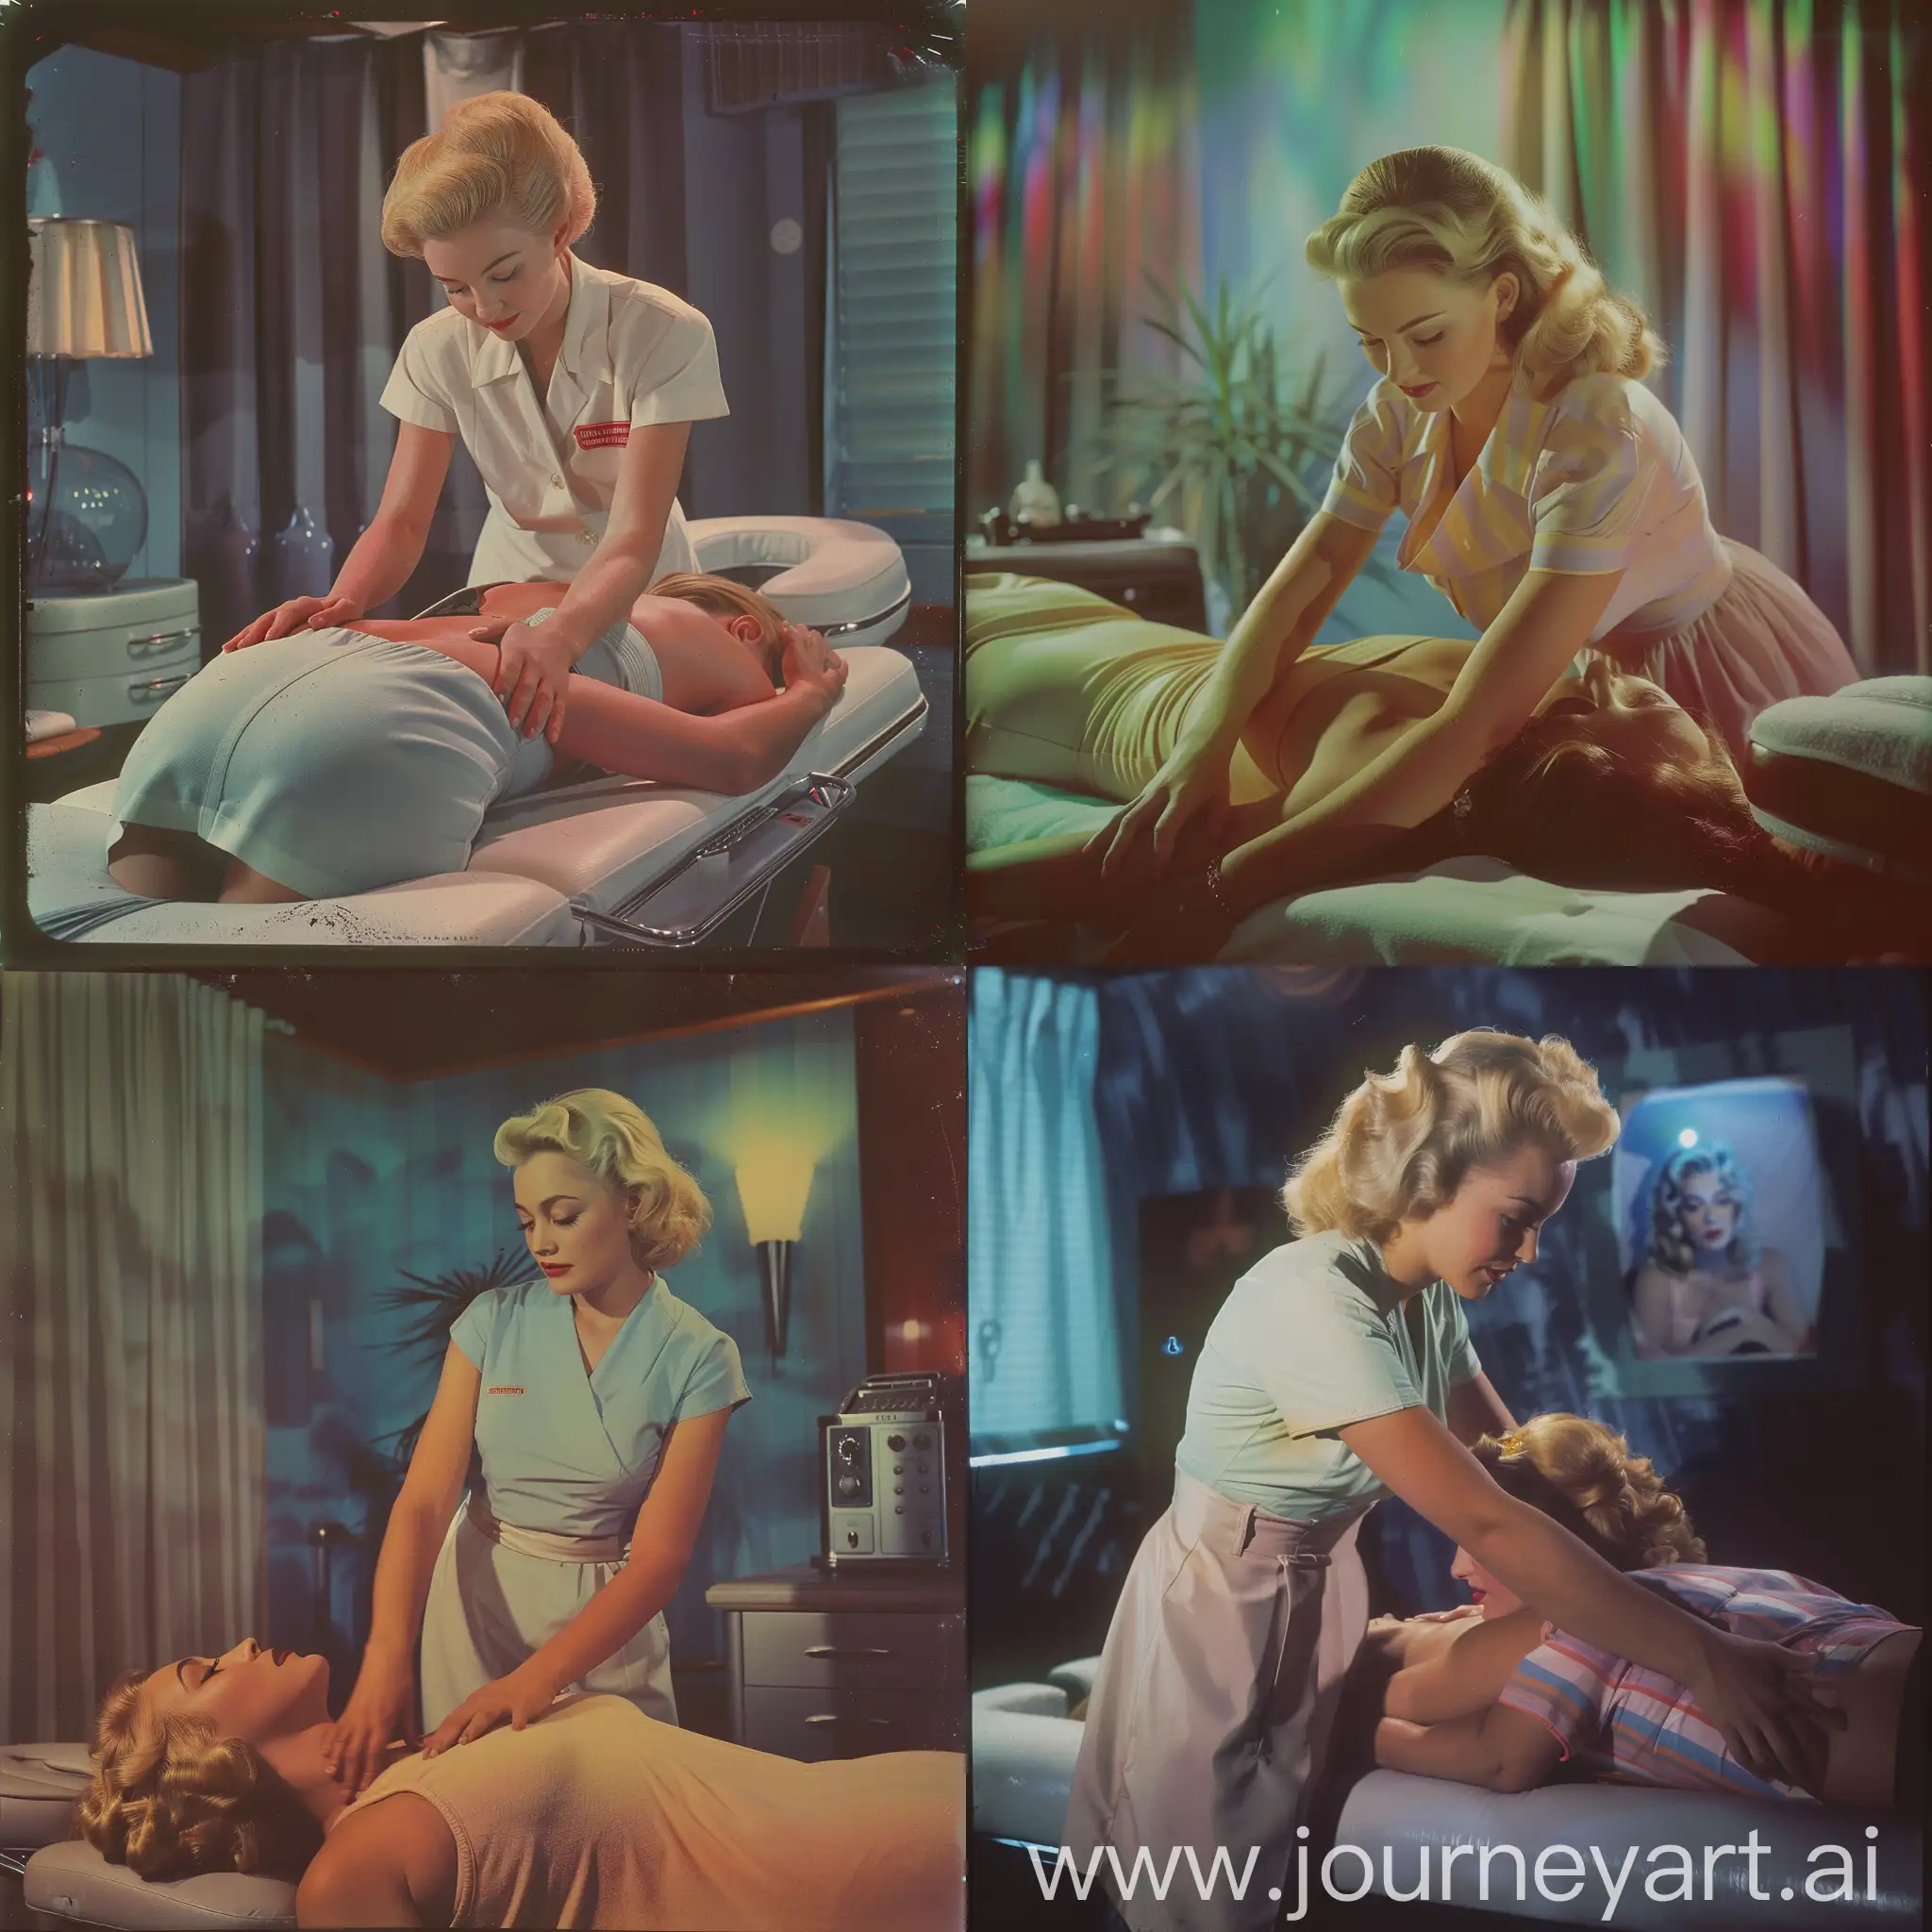 Blonde-Phoebe-Buffay-Massages-Woman-on-Massage-Bed-Vintage-1950s-Super-Panavision-70-Color-Image